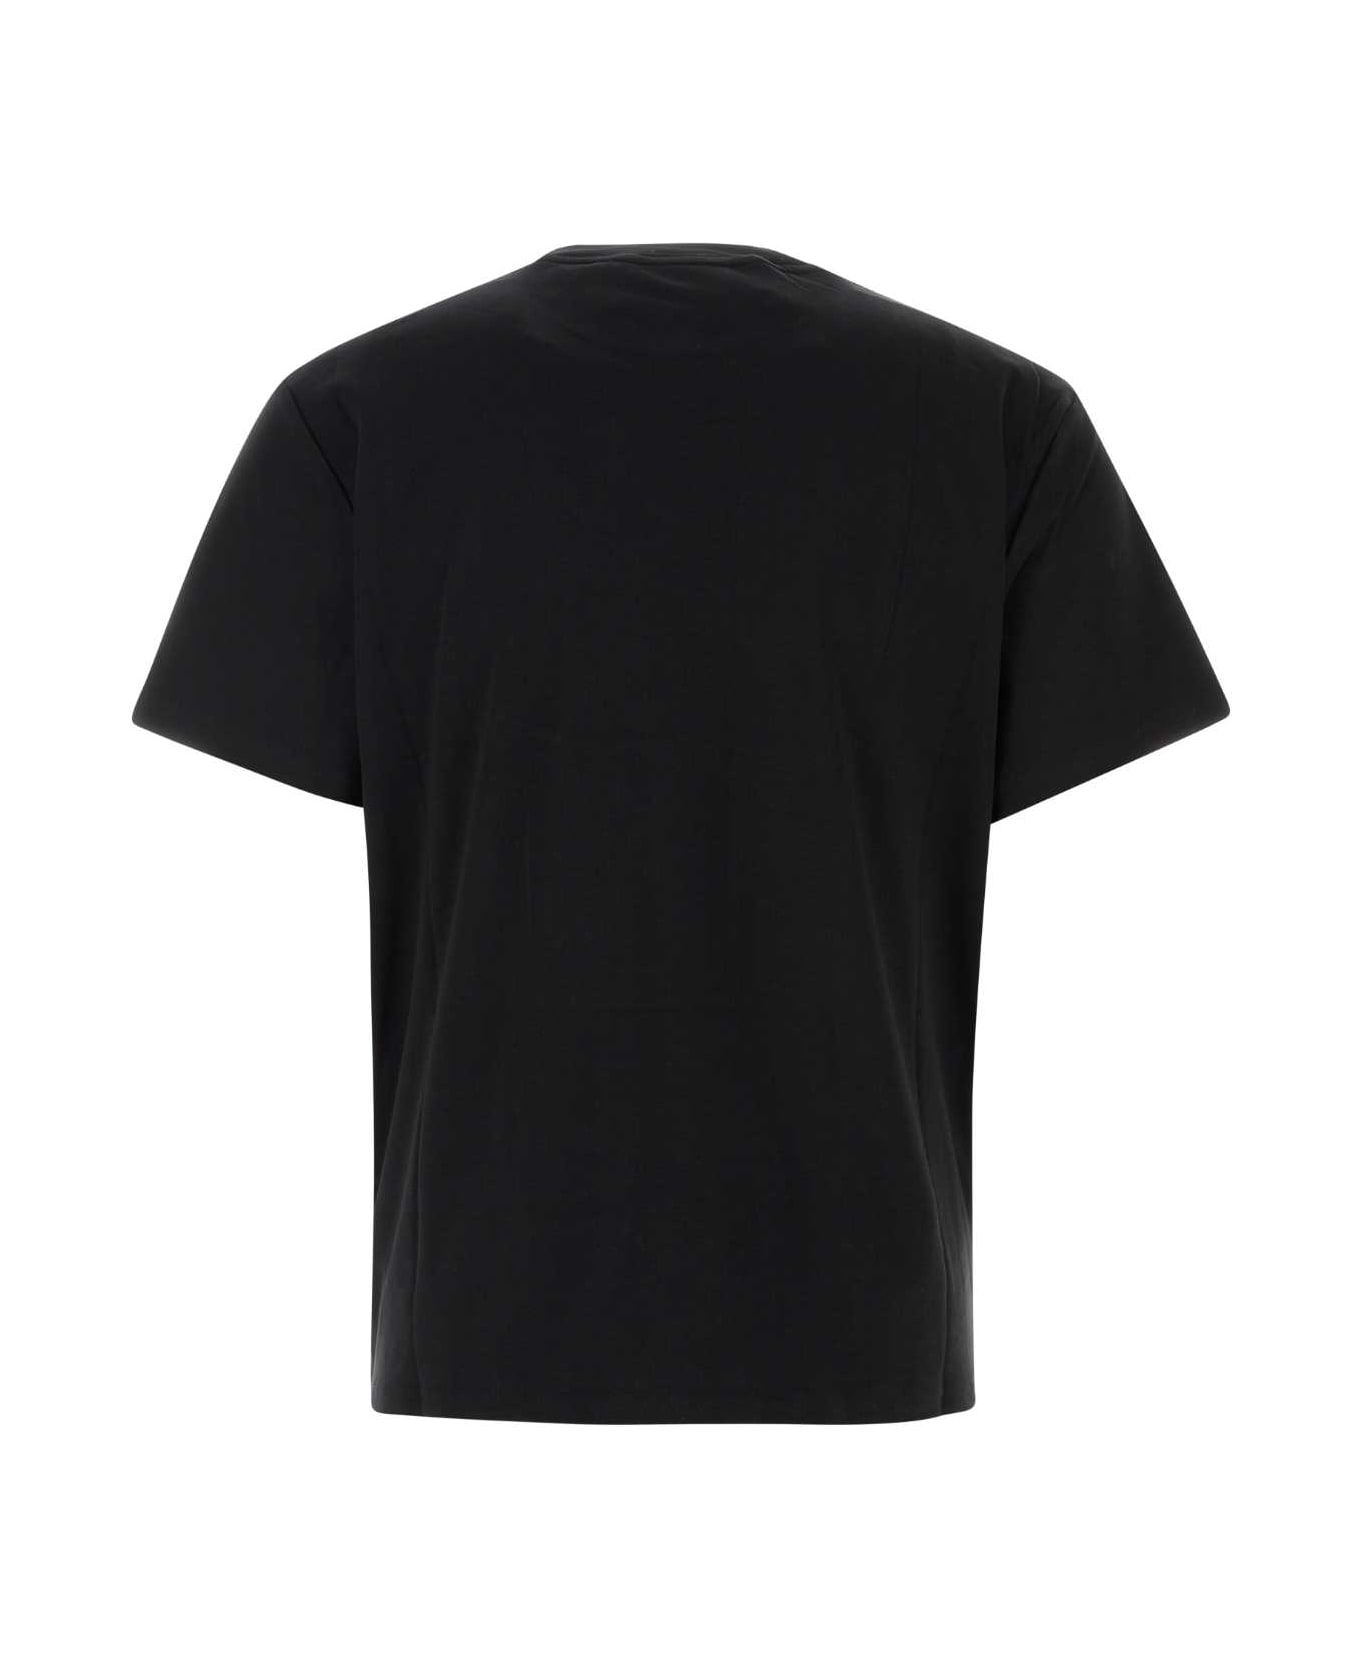 GCDS Black Cotton T-shirt - 02 シャツ